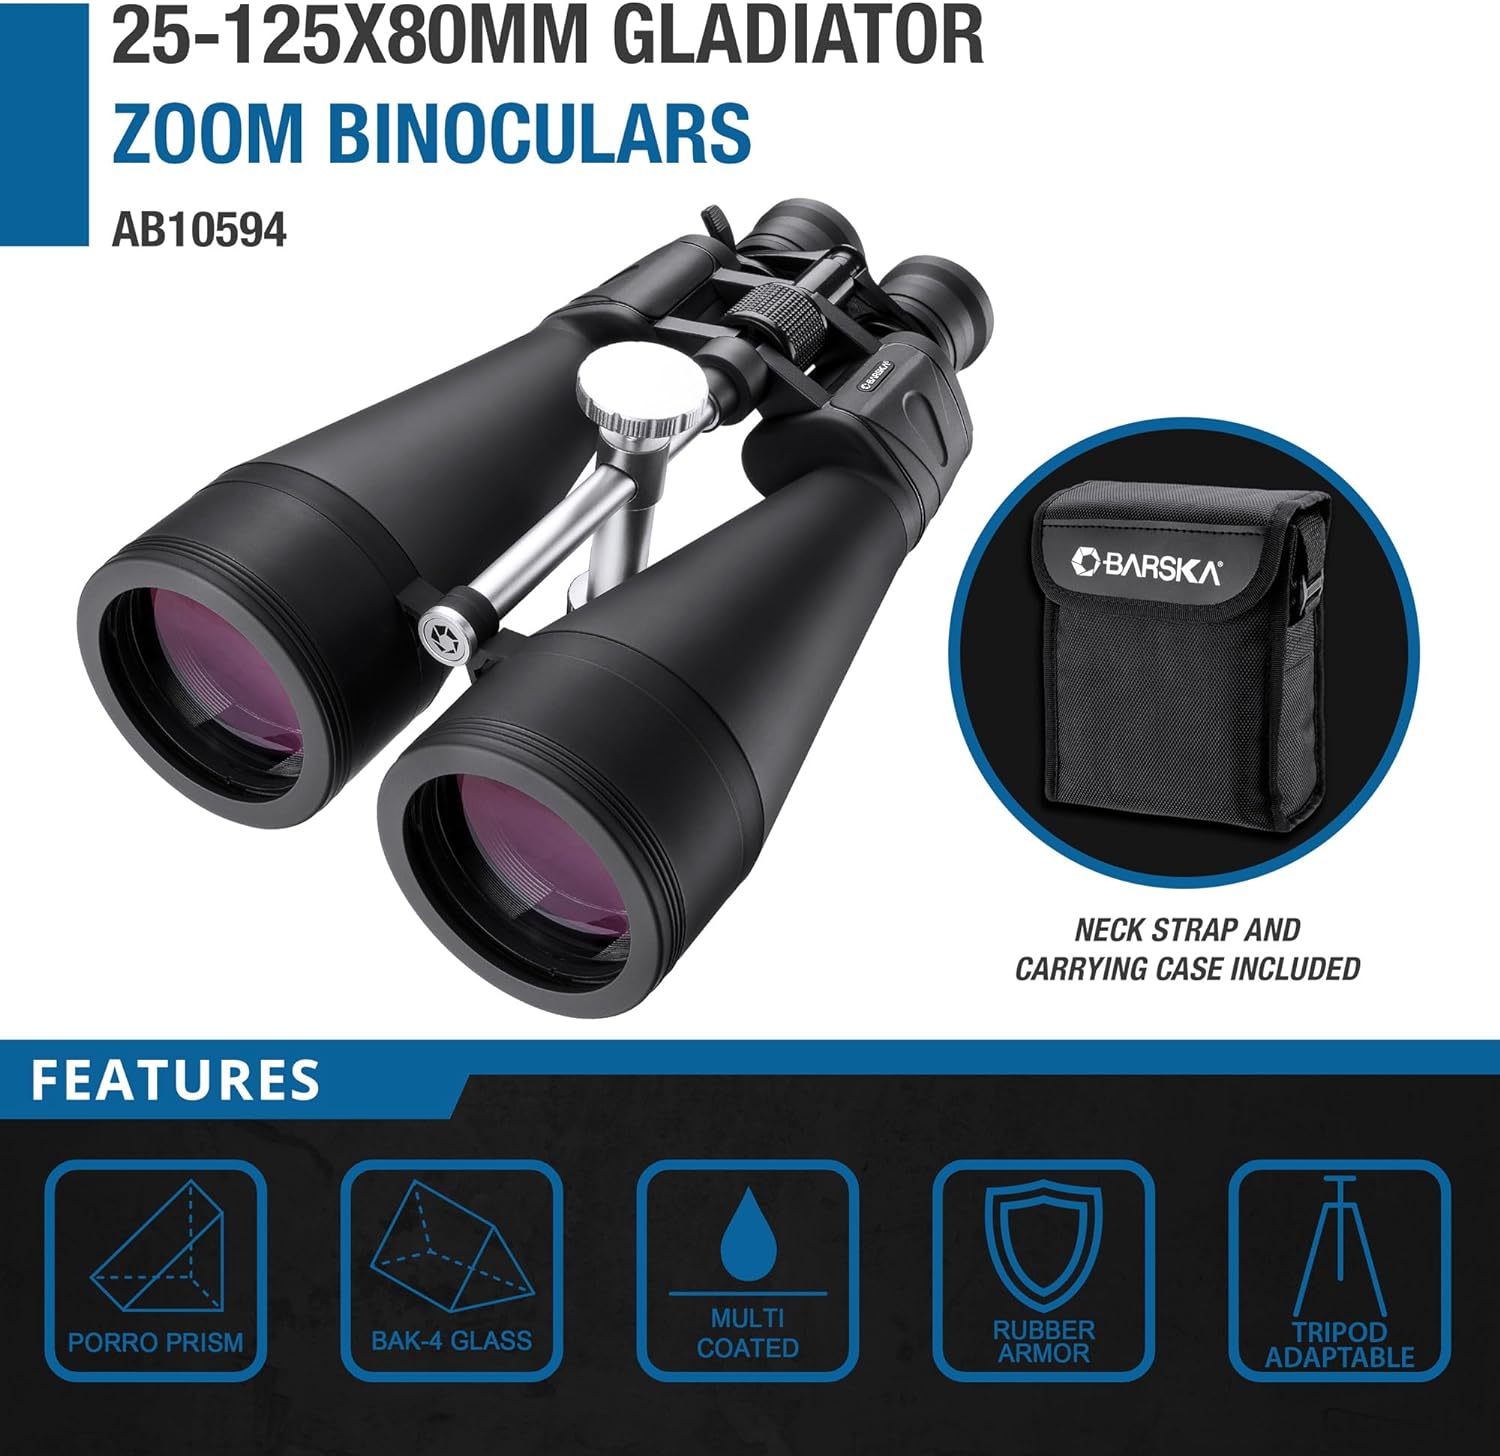 Barska Gladiator Zoom Binoculars with Tripod Adaptor for Astronomy, Birding, Sports, Long Range Viewing, etc